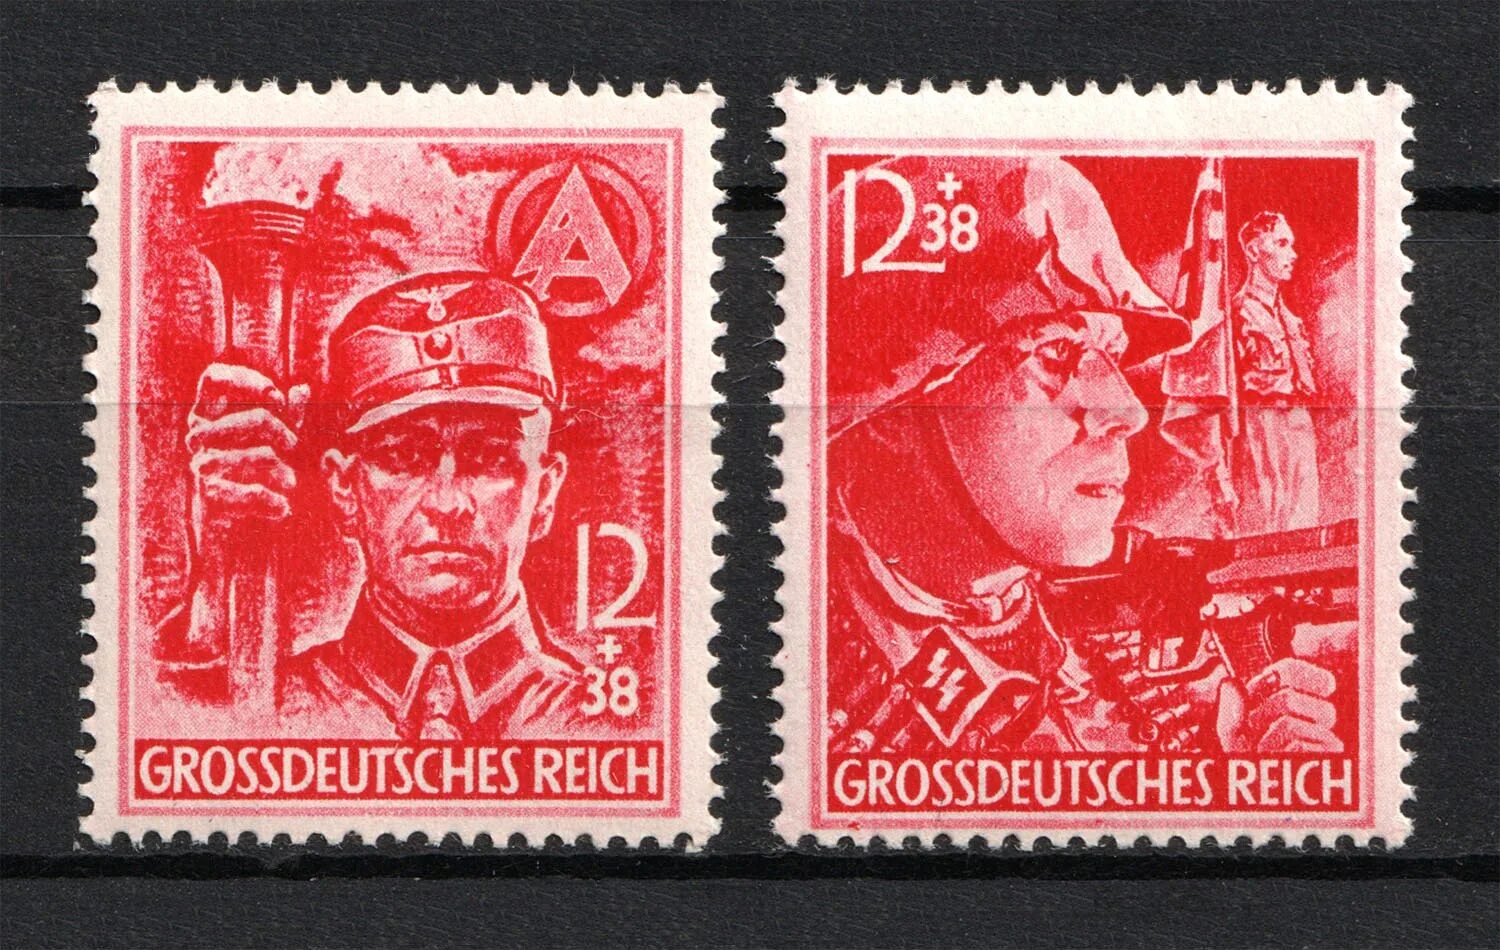 Почтовые марки третьего рейха Grossdeutsches Reich. Монеты 1945 Рейх. Марки 3 рейха 1945. Фашистские марки